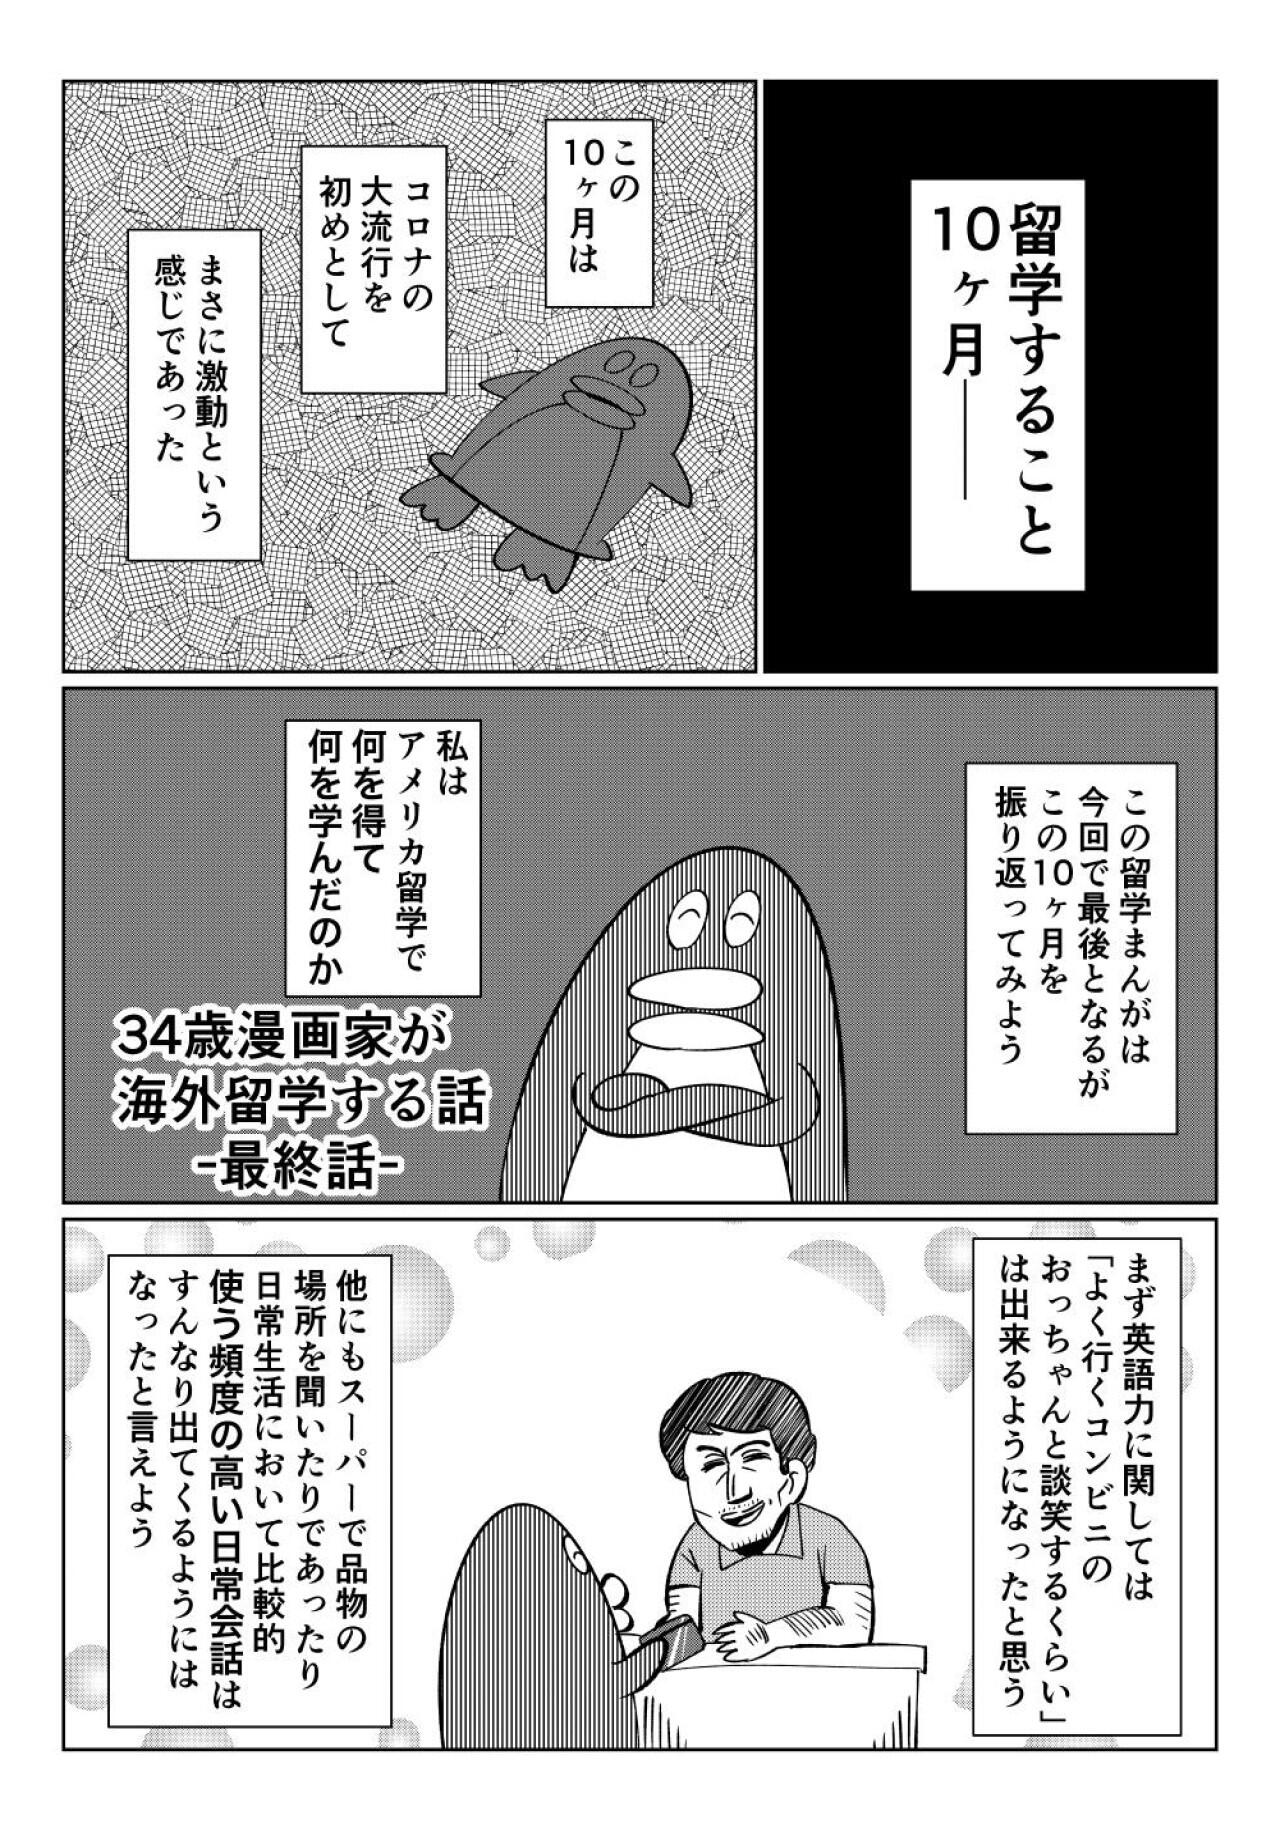 https://www.ryugaku.co.jp/column/images/34sai15_1_1280.jpg